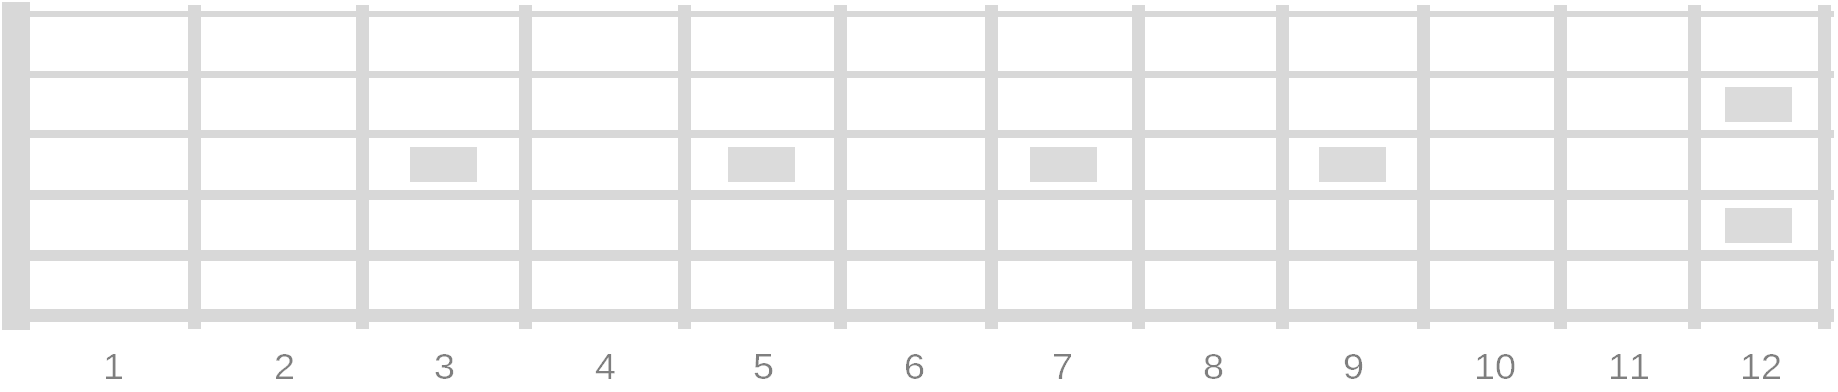 Guitar Fretboard Chart Print